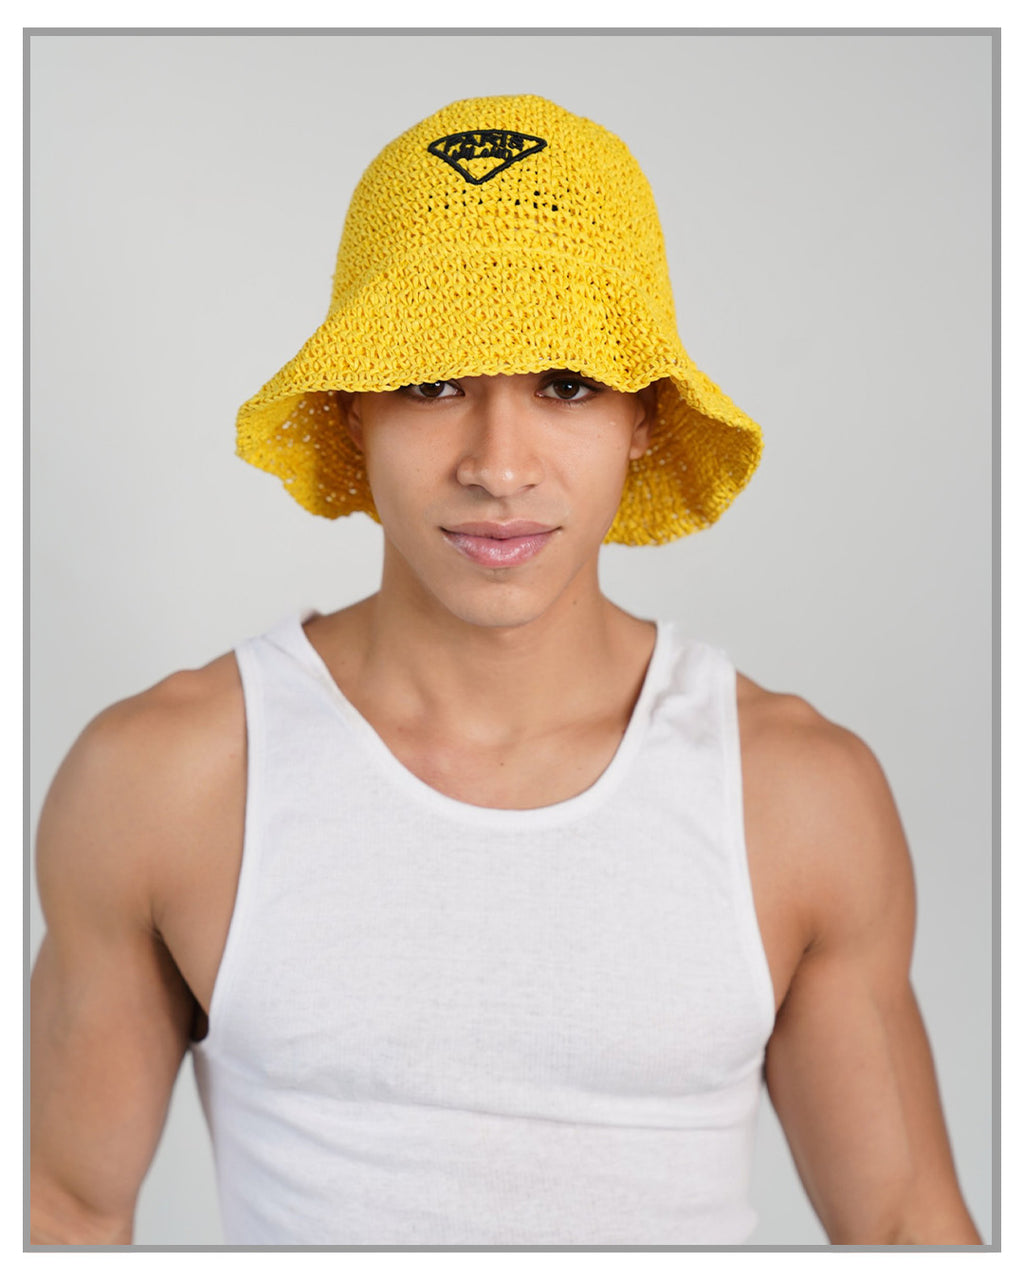 Paris Milano Yellow Embroidery Straw Bucket Hat